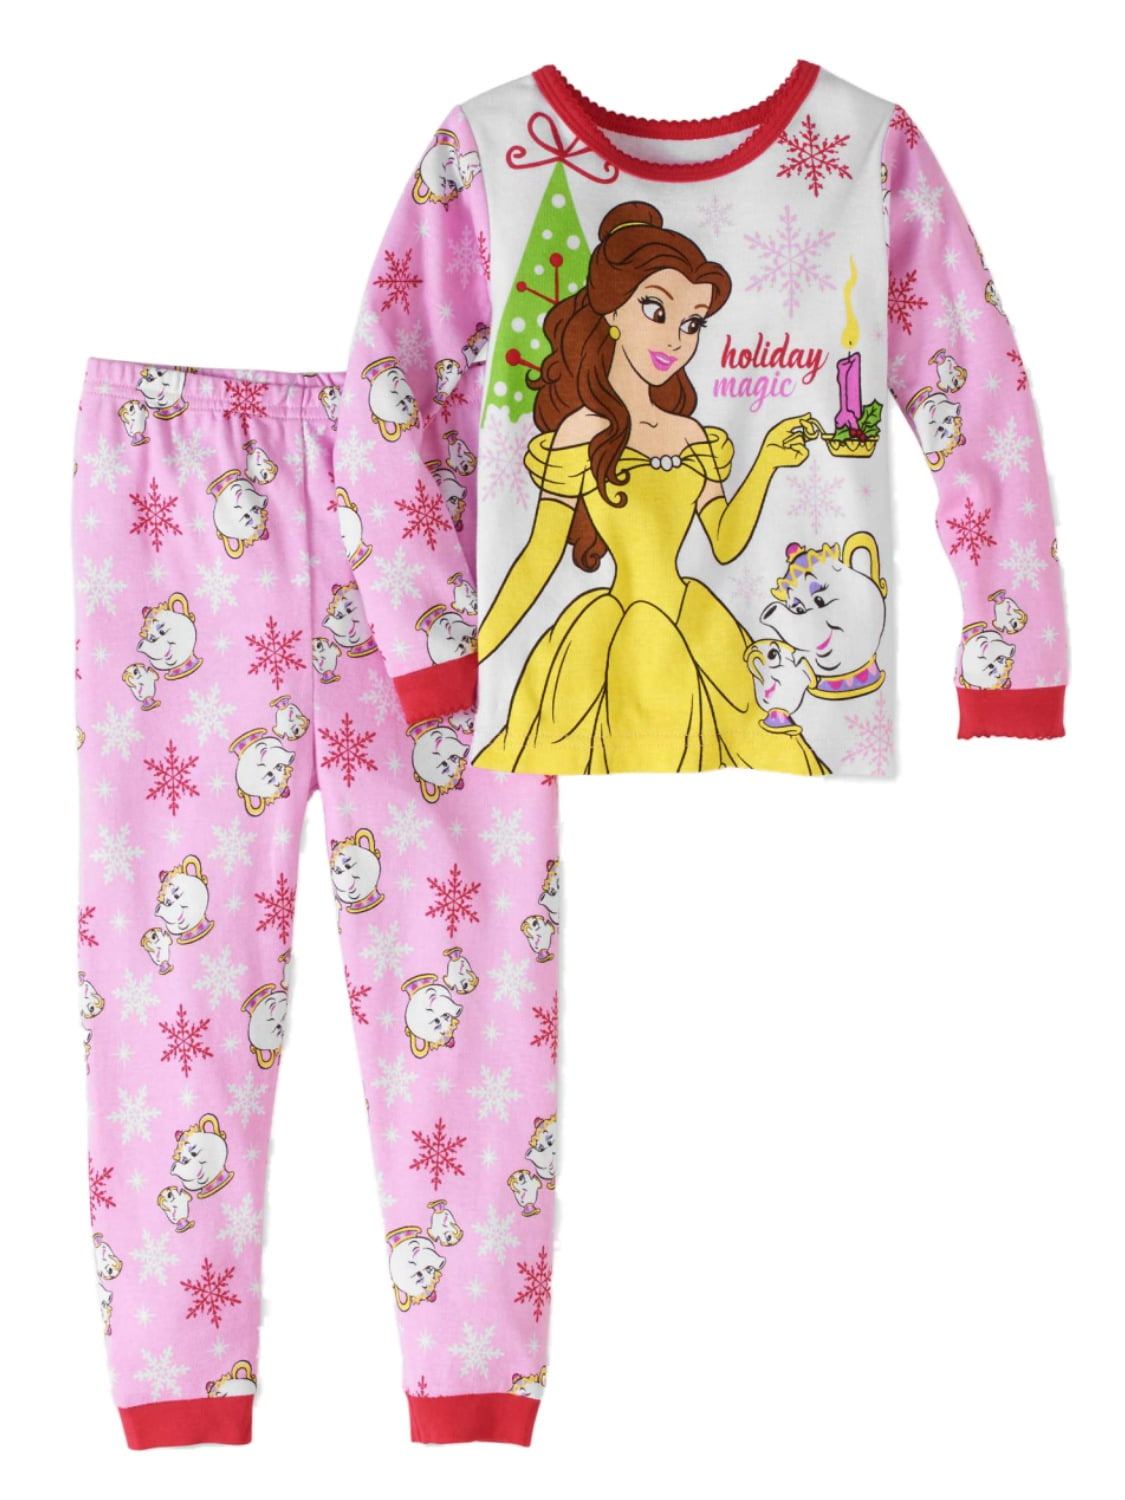 Belle pyjamas